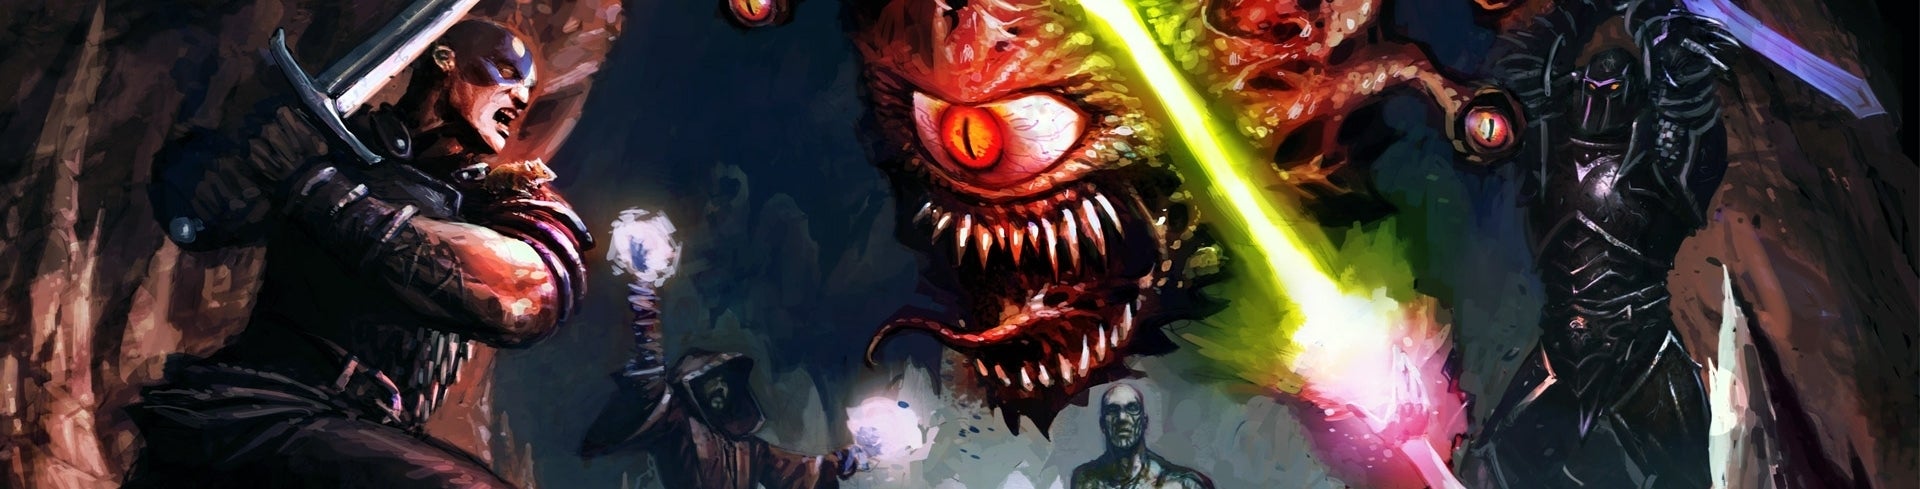 Image for Baldur's Gate 2: Enhanced Edition review